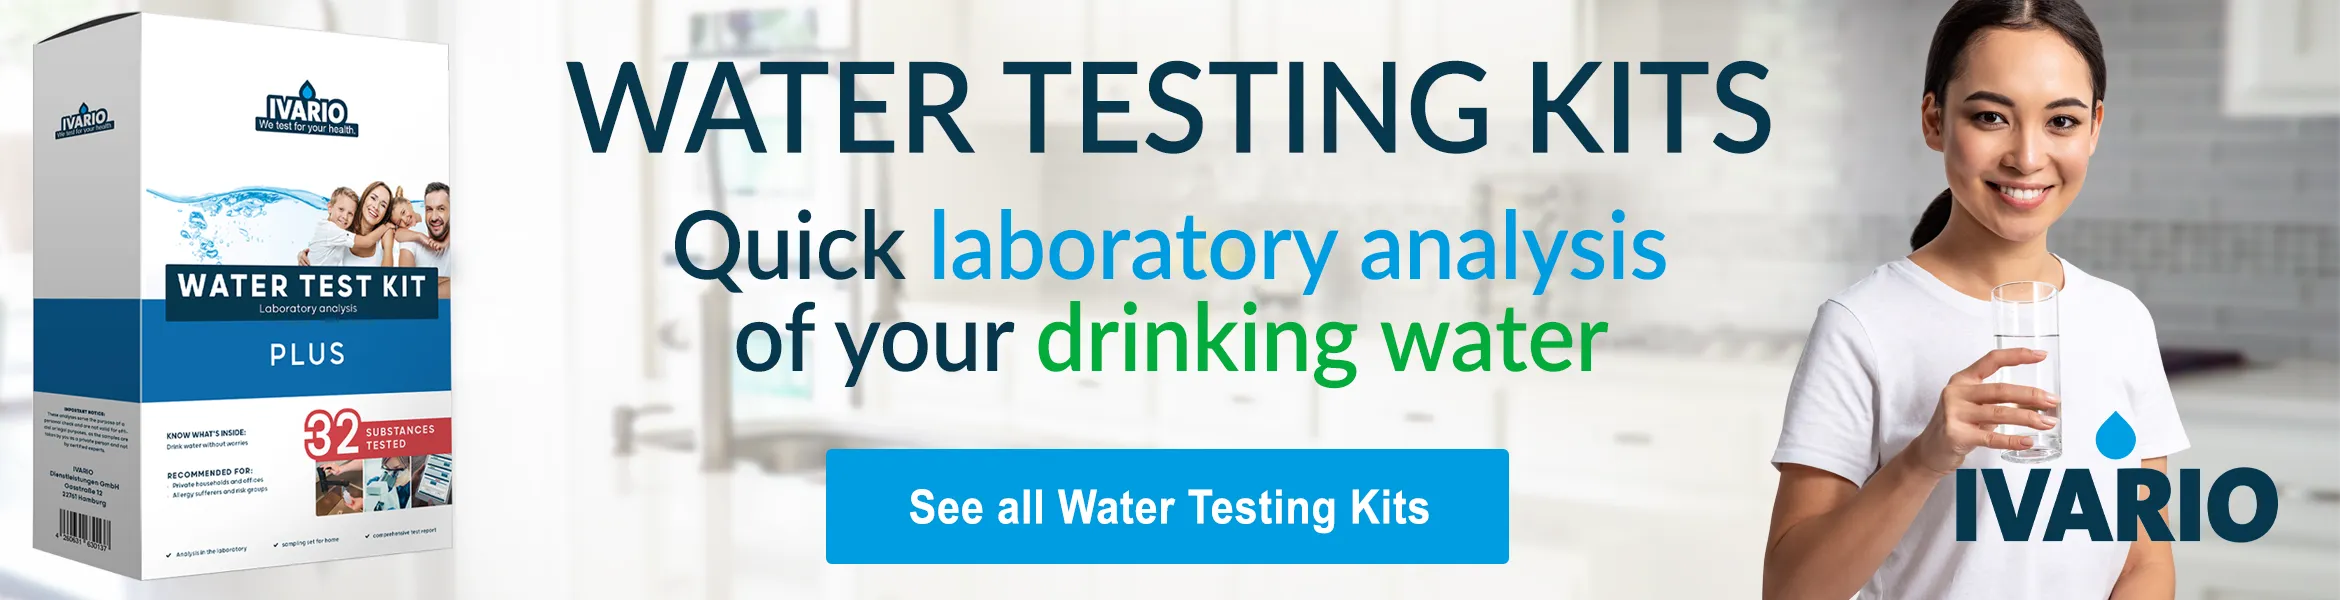 IVARIO Water Test Kit Promotion